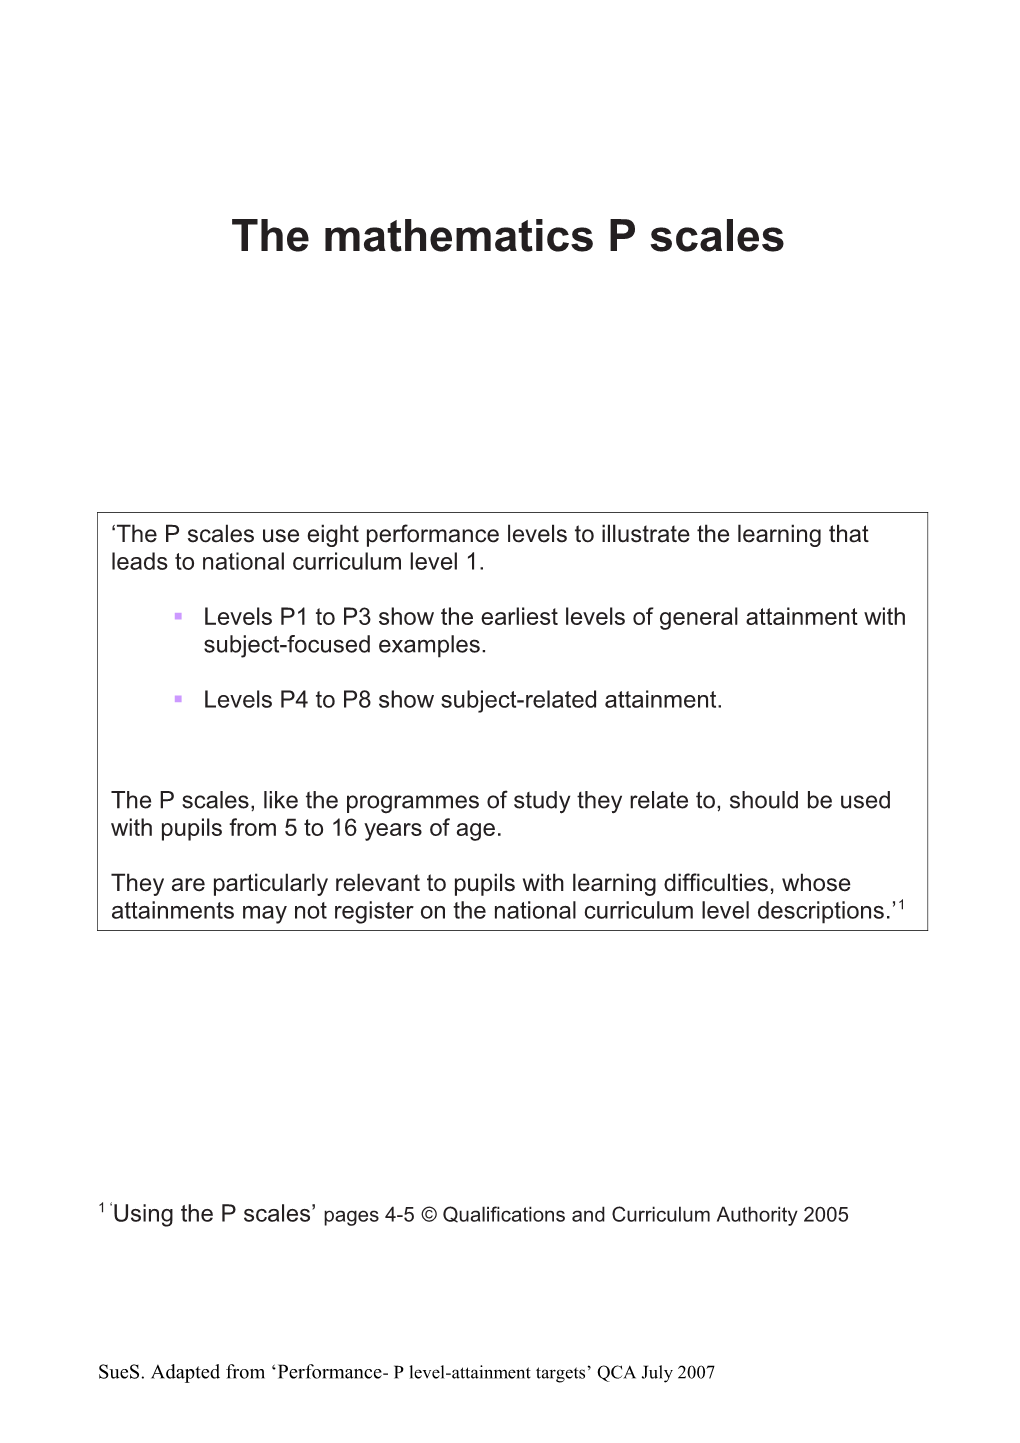 The Mathematics P Scales